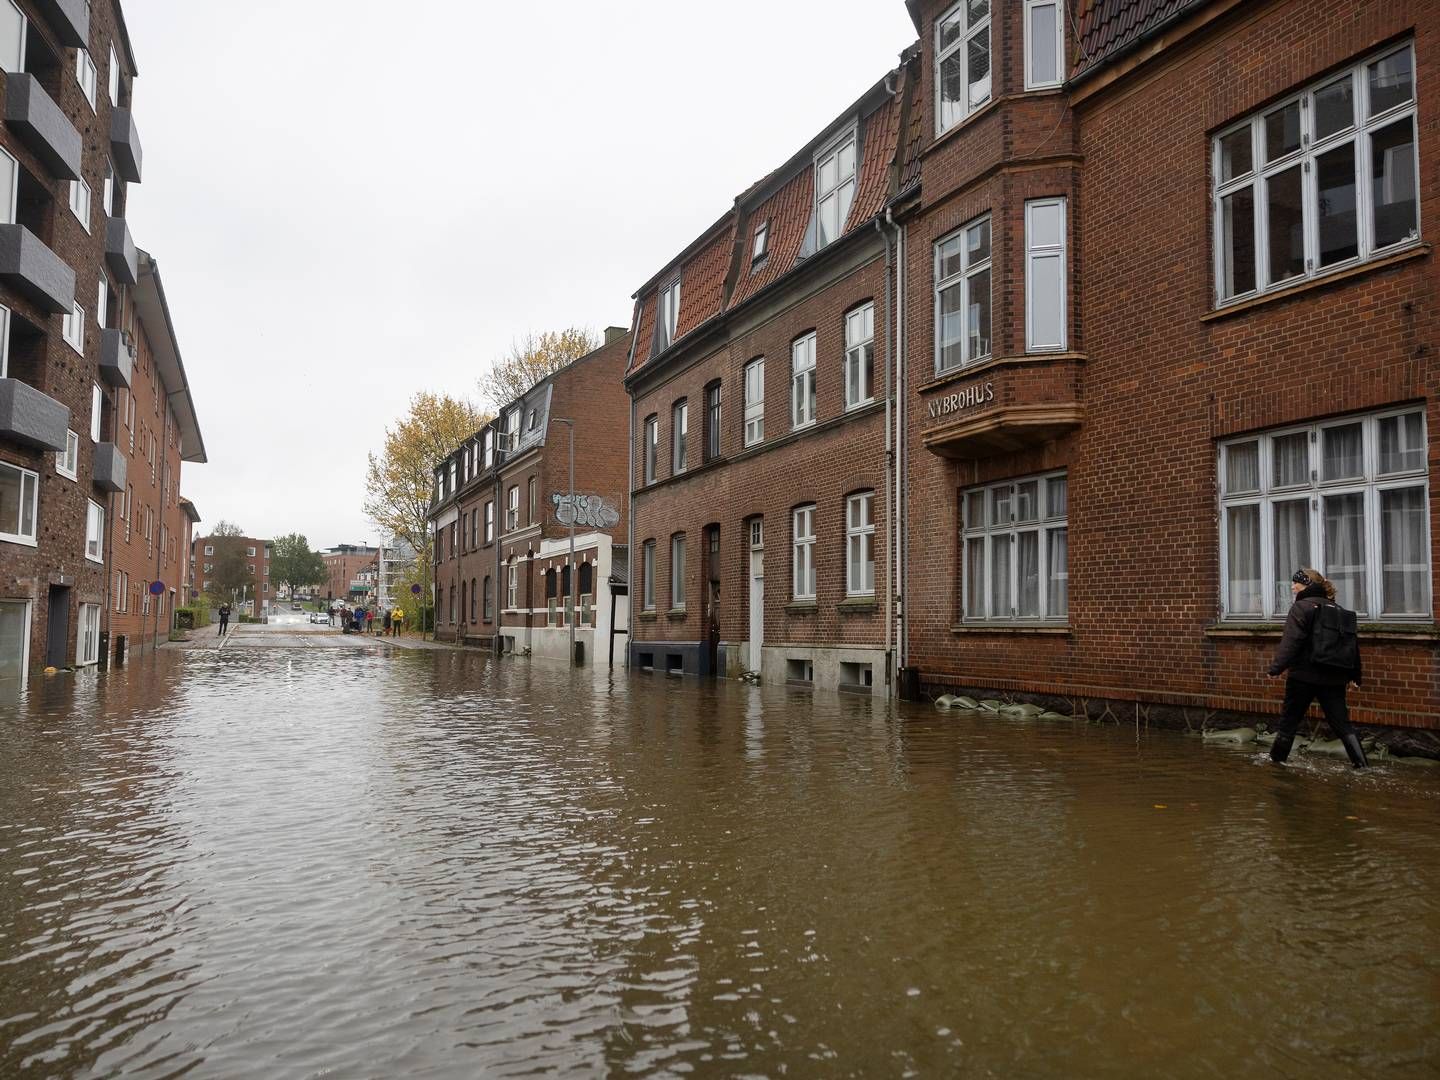 2023 slog den hidtidige nedbørsrekord. Her ses vandmasser i Kolding i oktober. | Photo: Thomas Borberg/Ritzau Scanpix